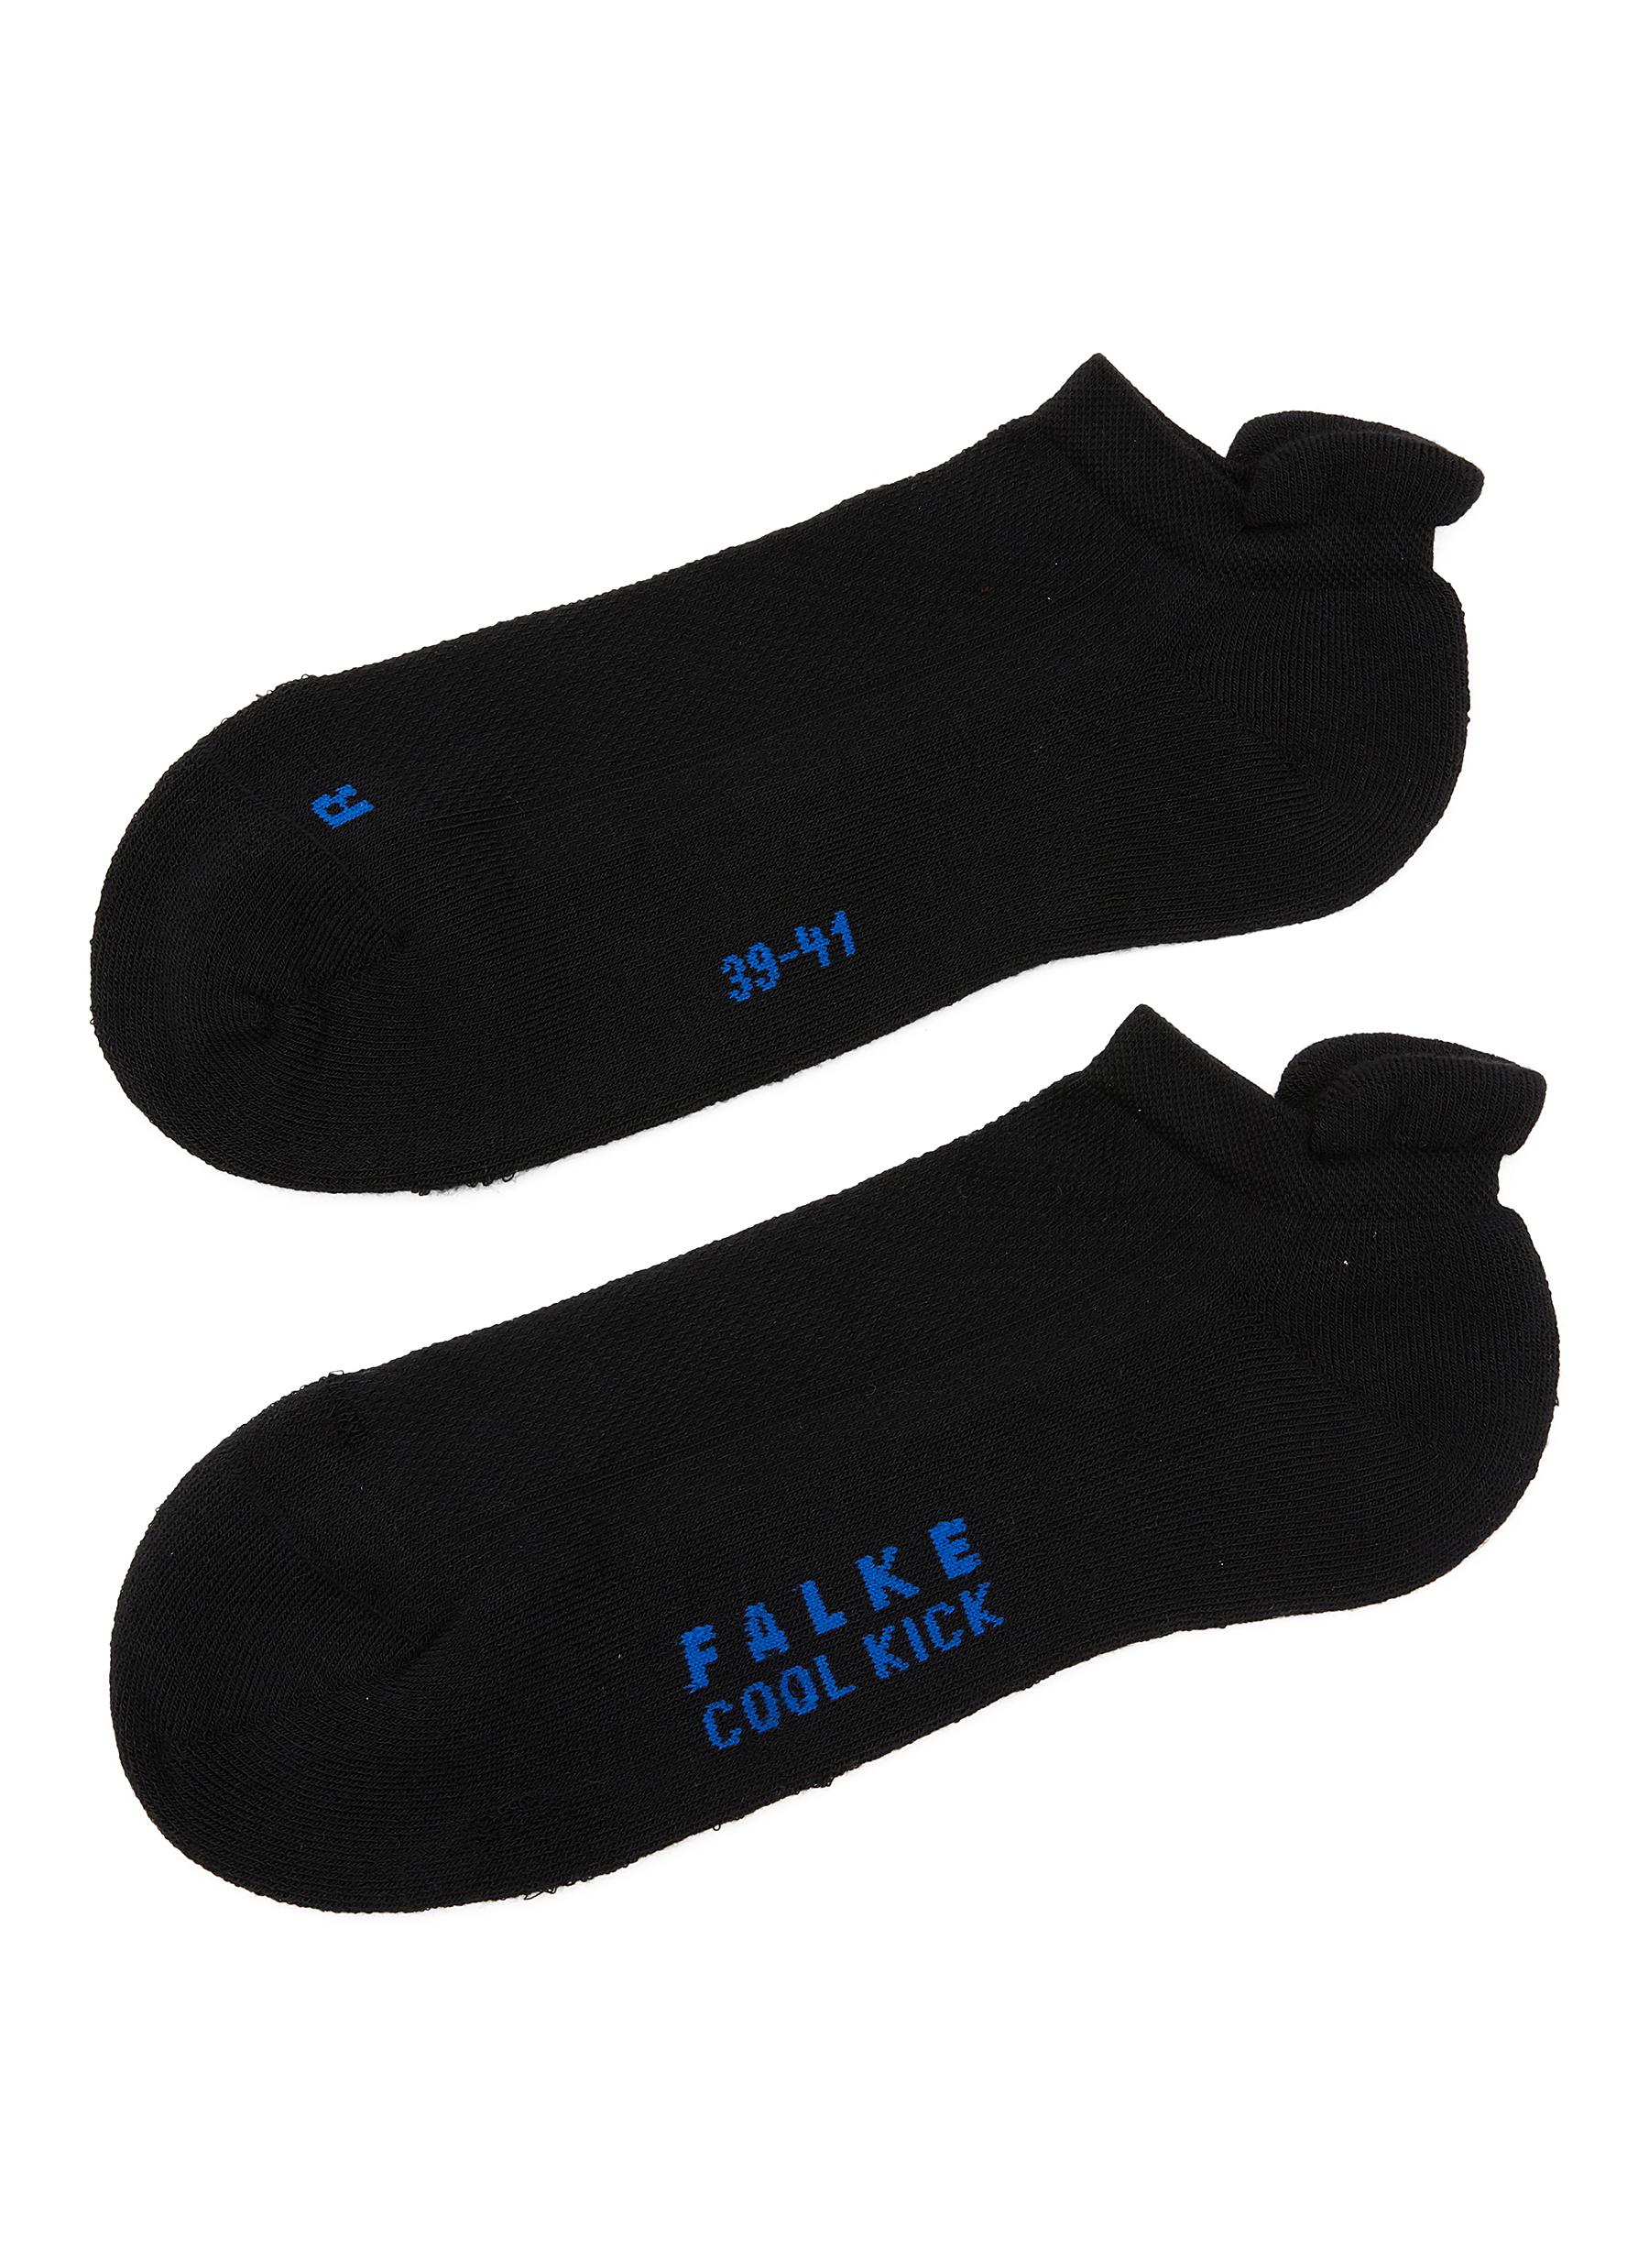 FALKE Cool Kick Invisible Ankle Socks